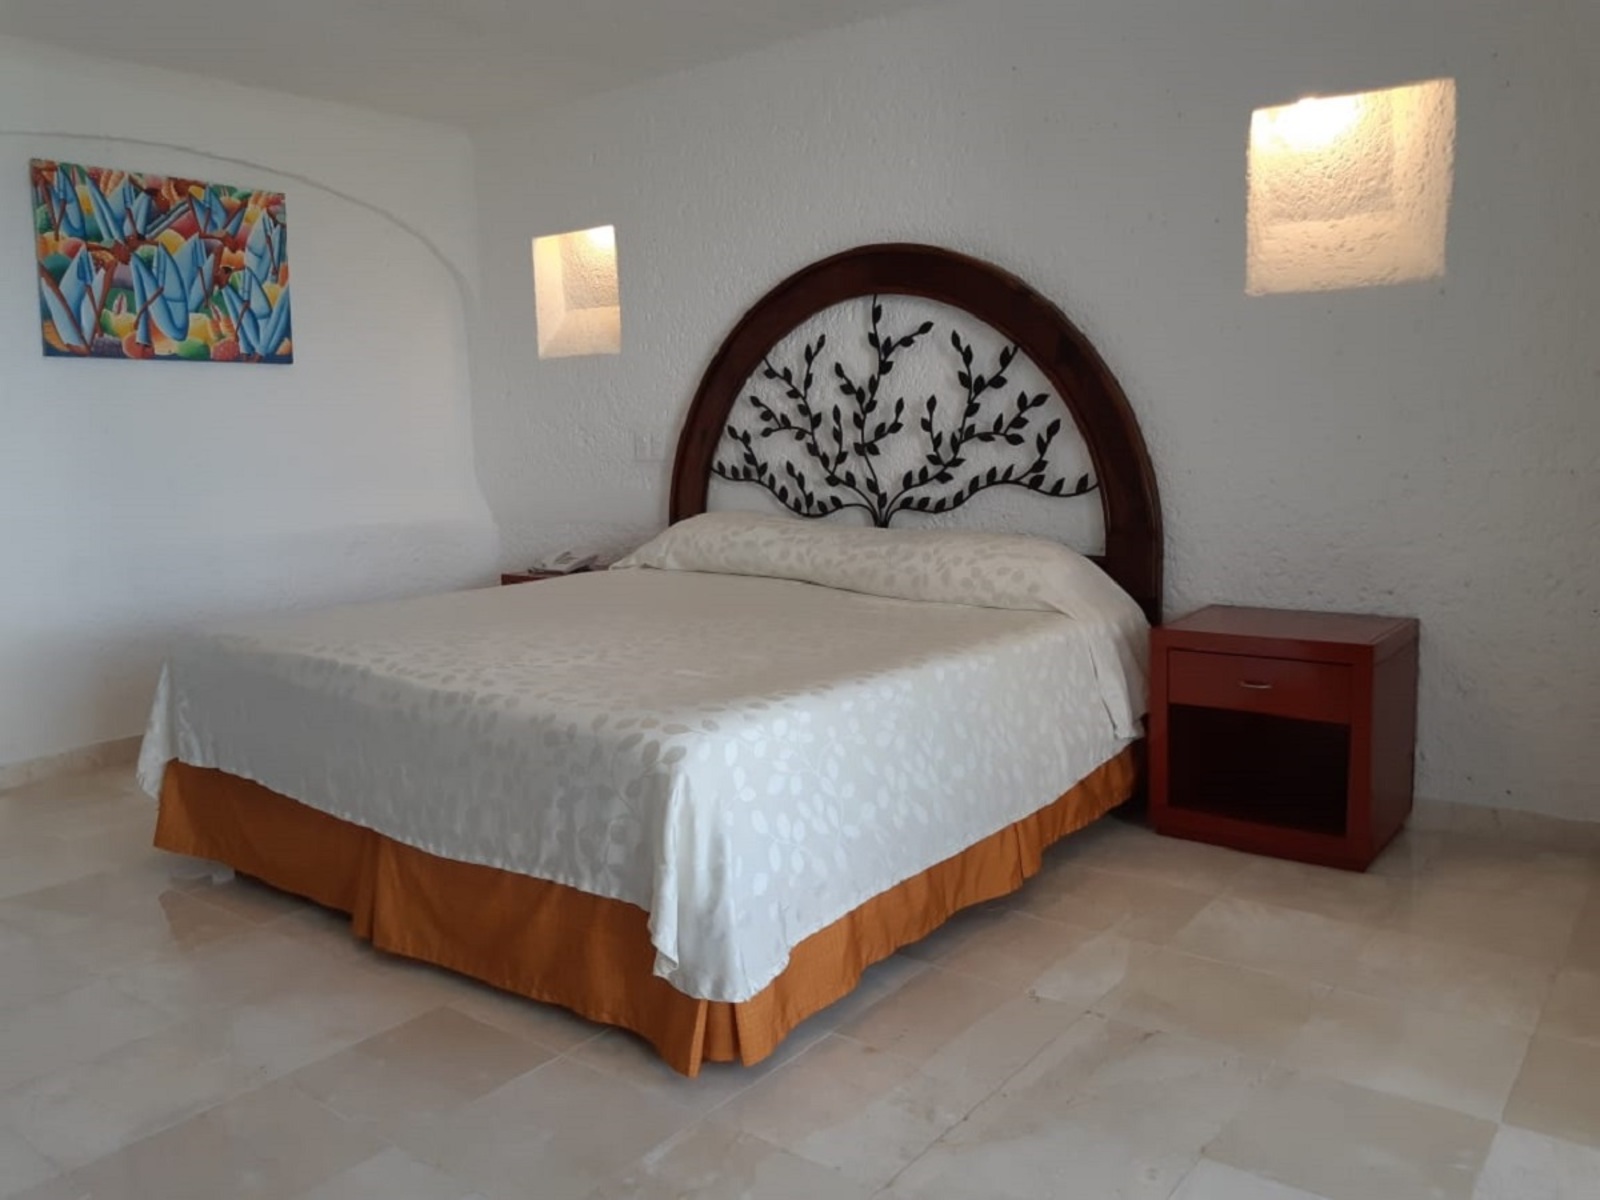 Maya Caribe Beach House by Faranda Hotels